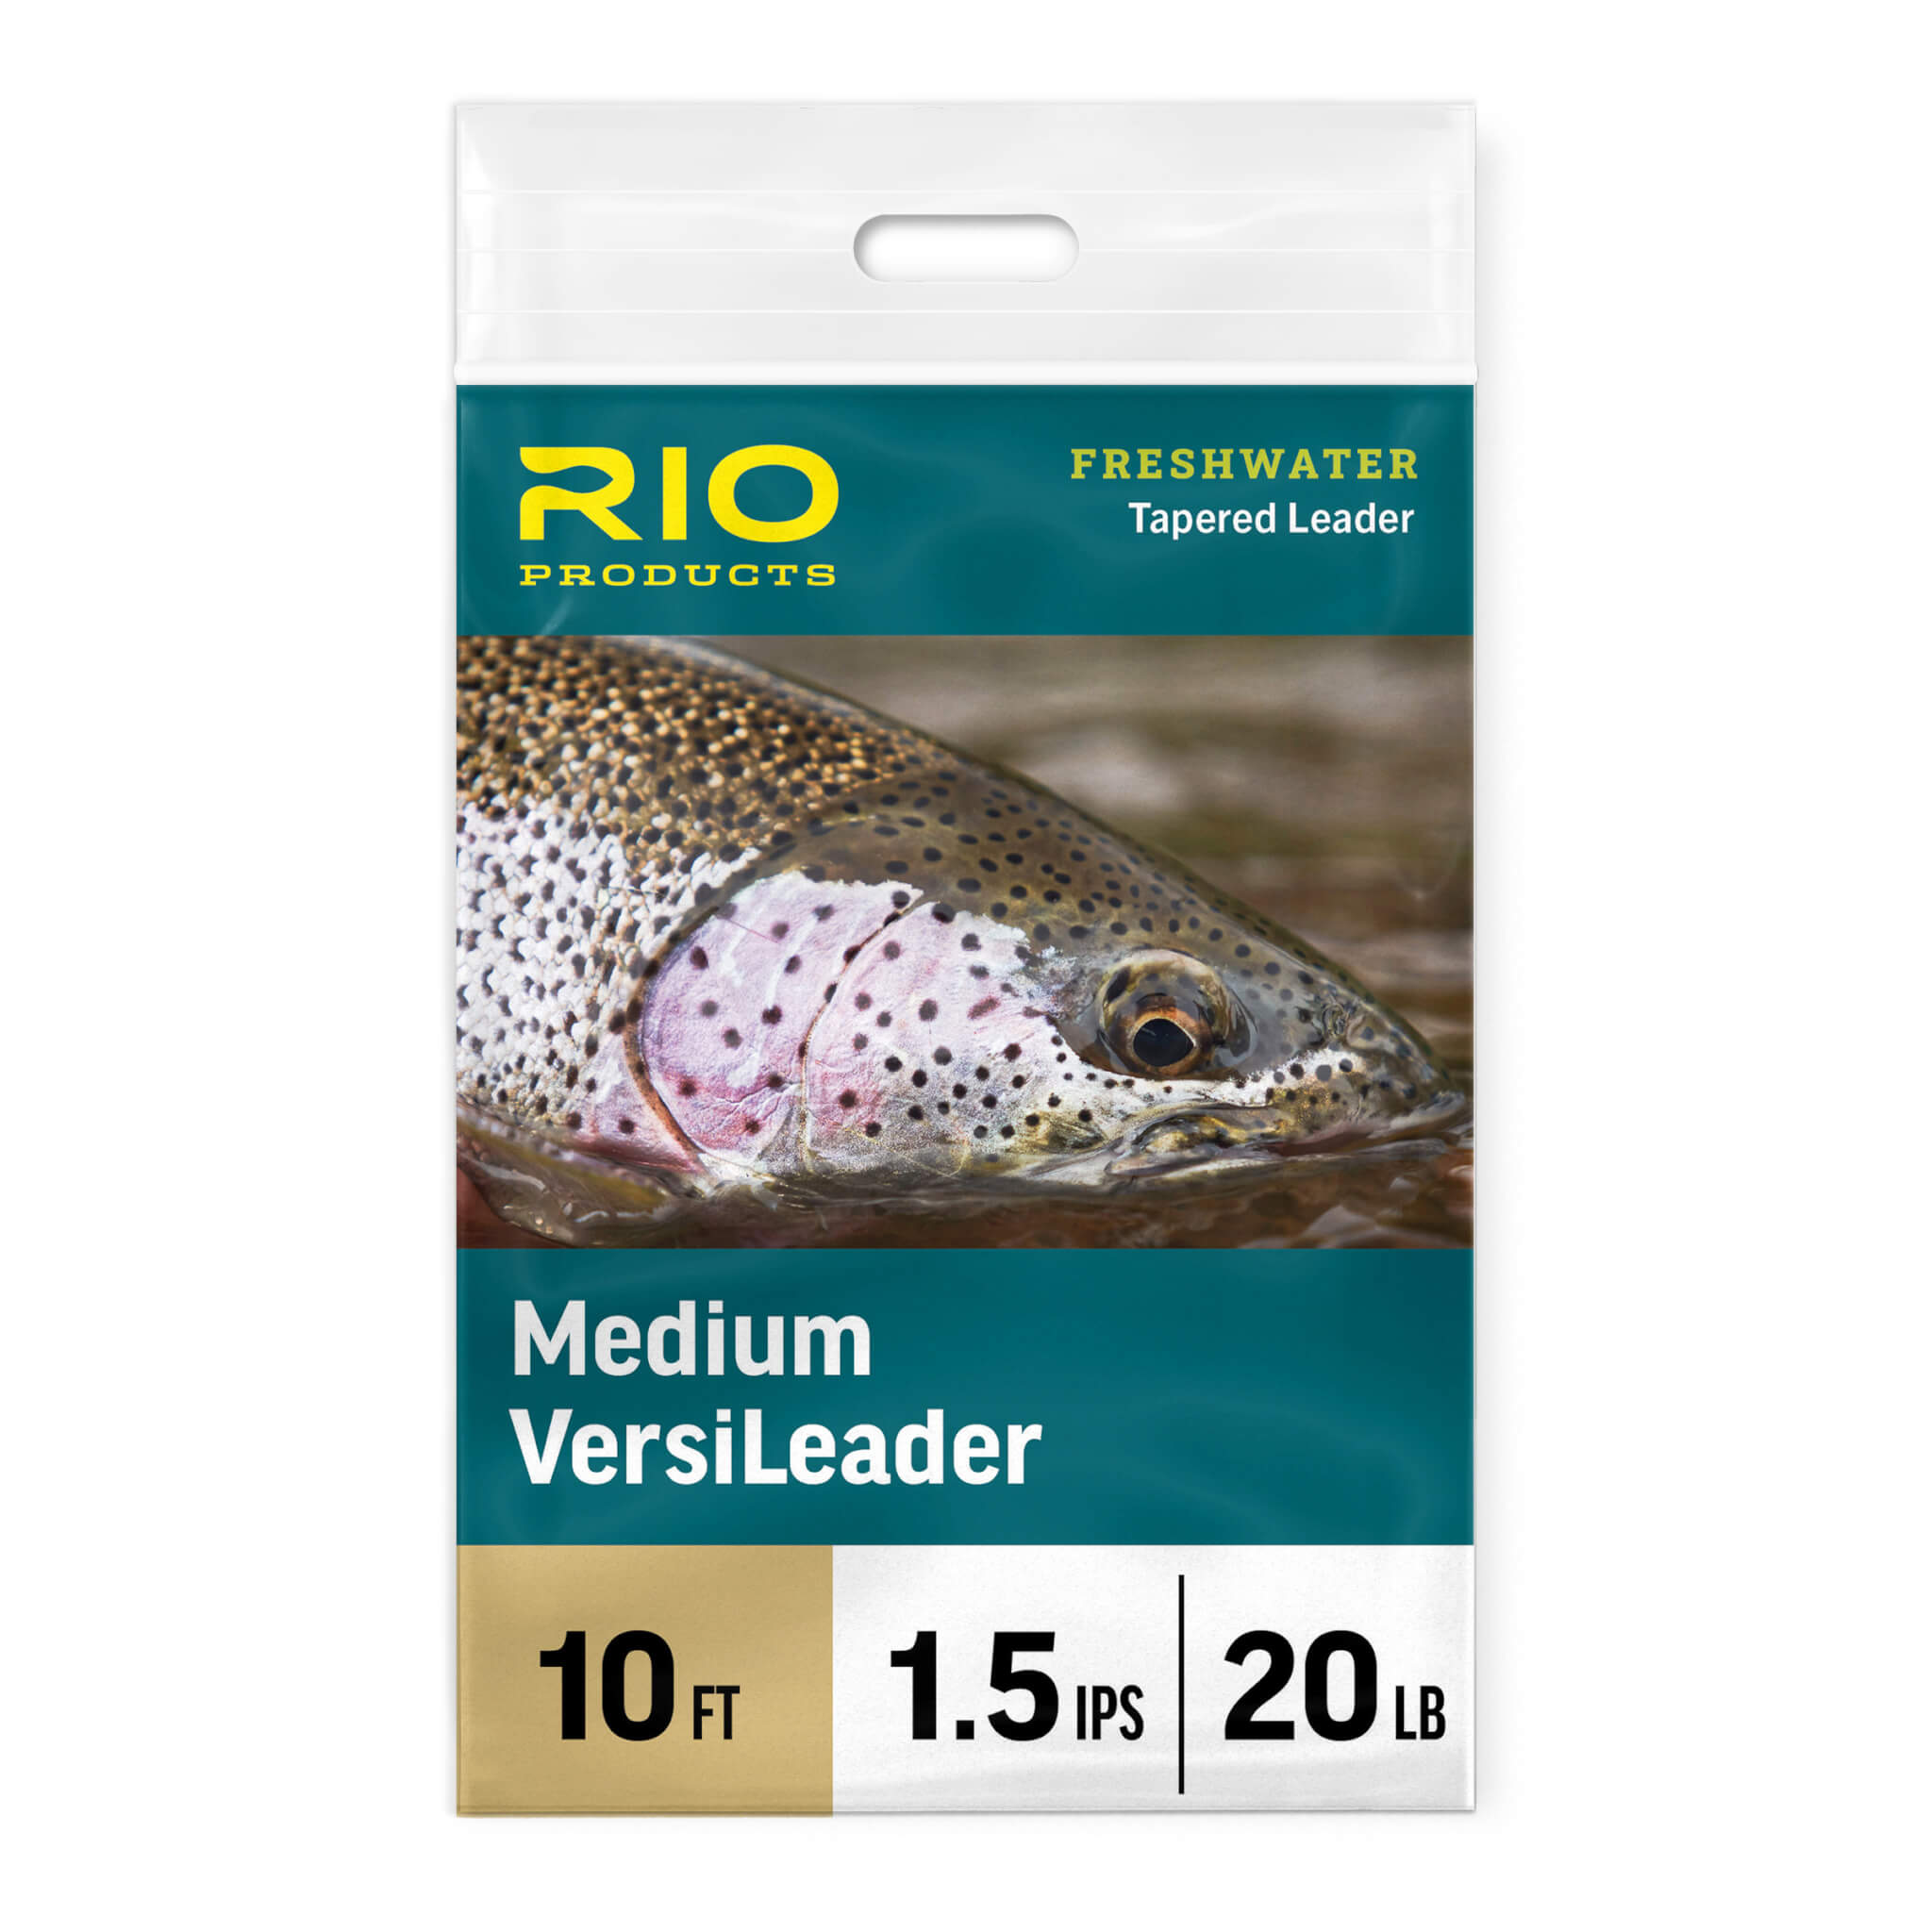 RIO SPEY MEDIUM VERSILEADER – Guide Flyfishing